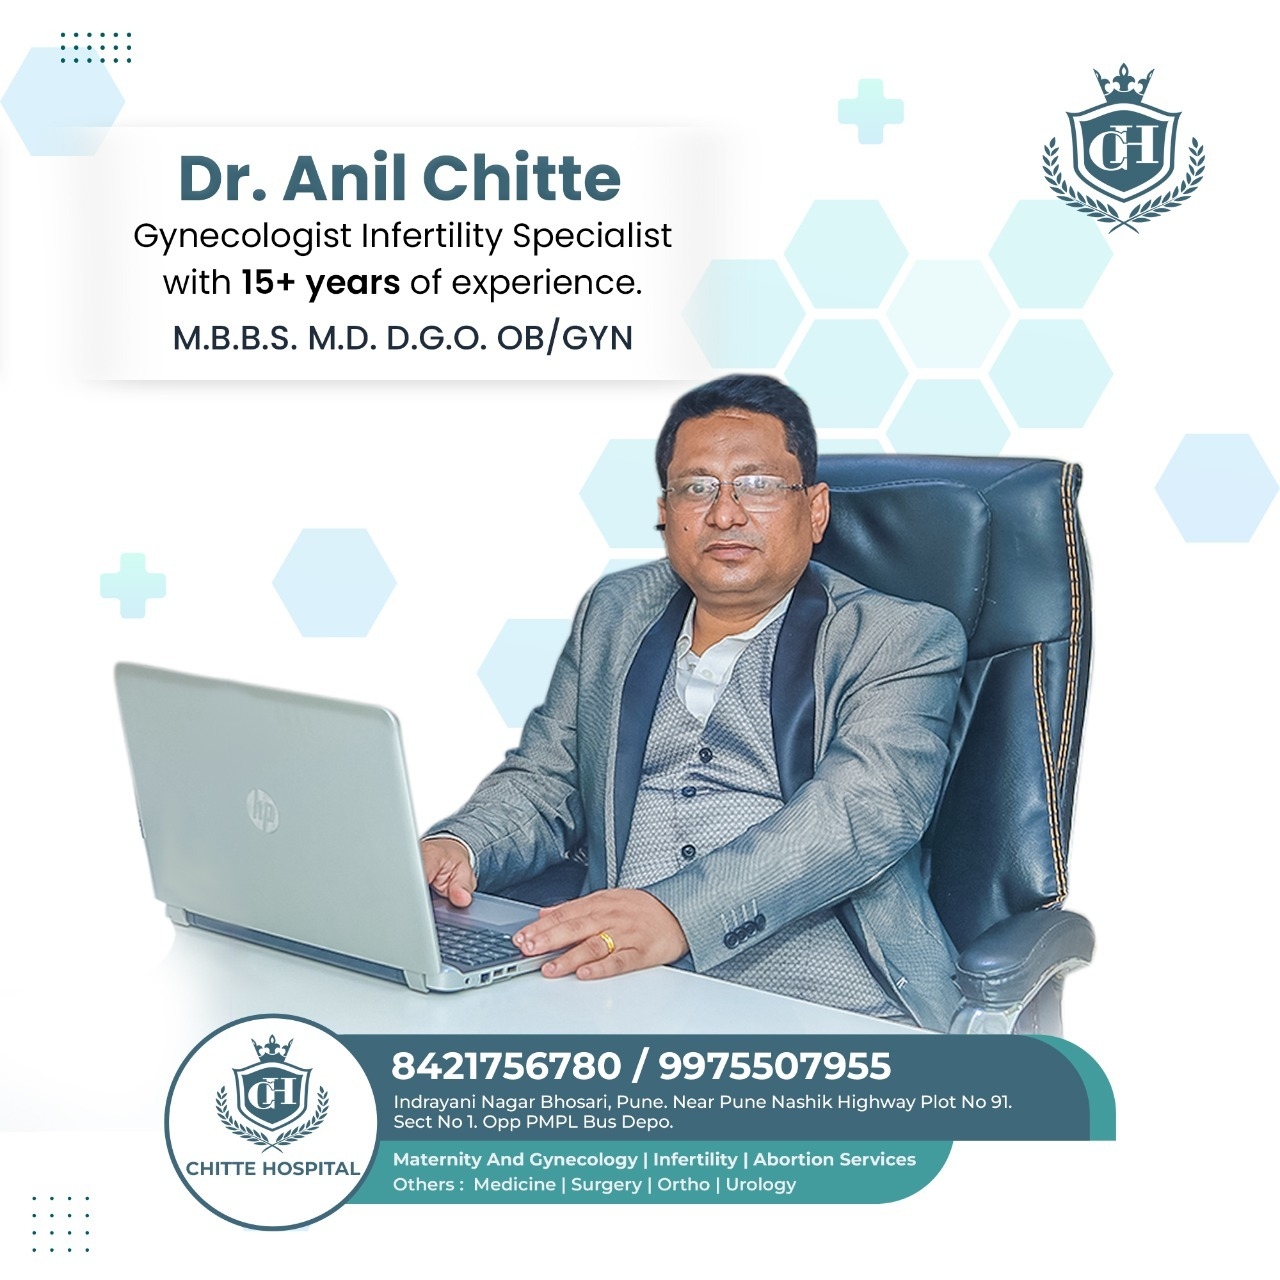 Dr. Anil Chitte